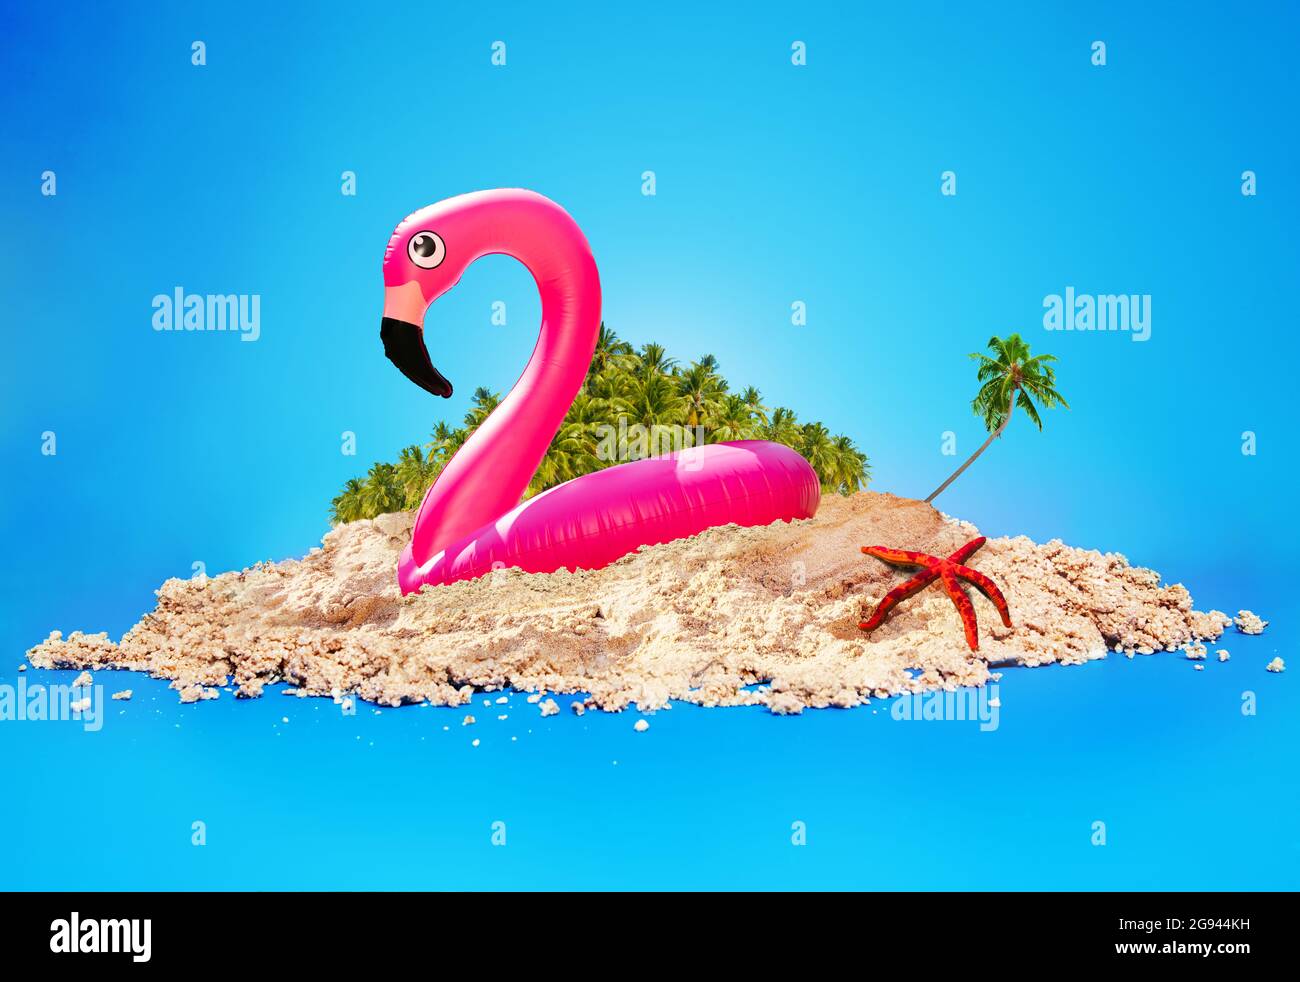 Beach fun illustration of flamingo and sand island Stock Photo